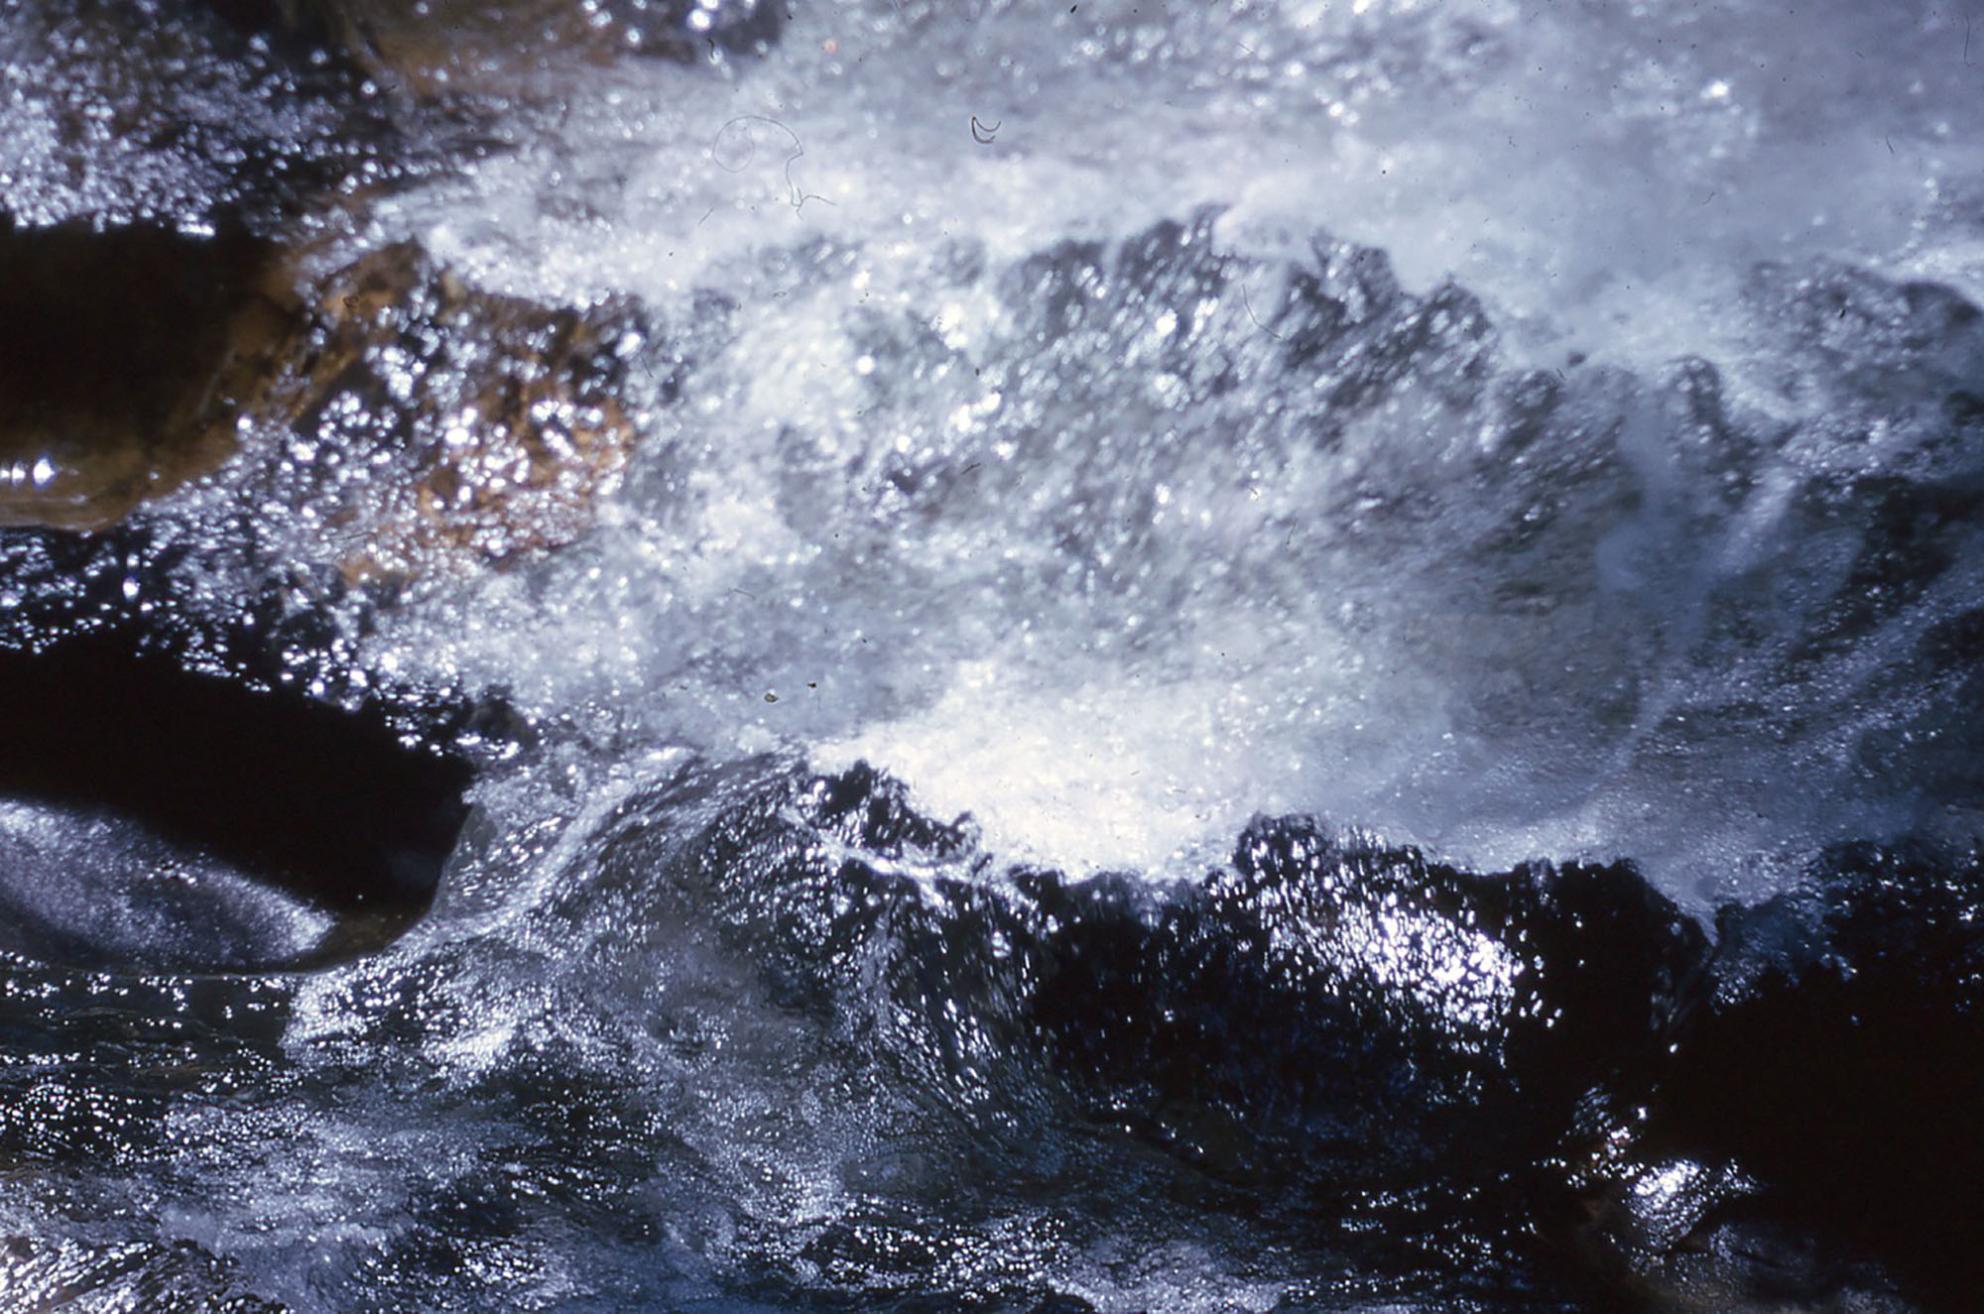 flowing water in stream